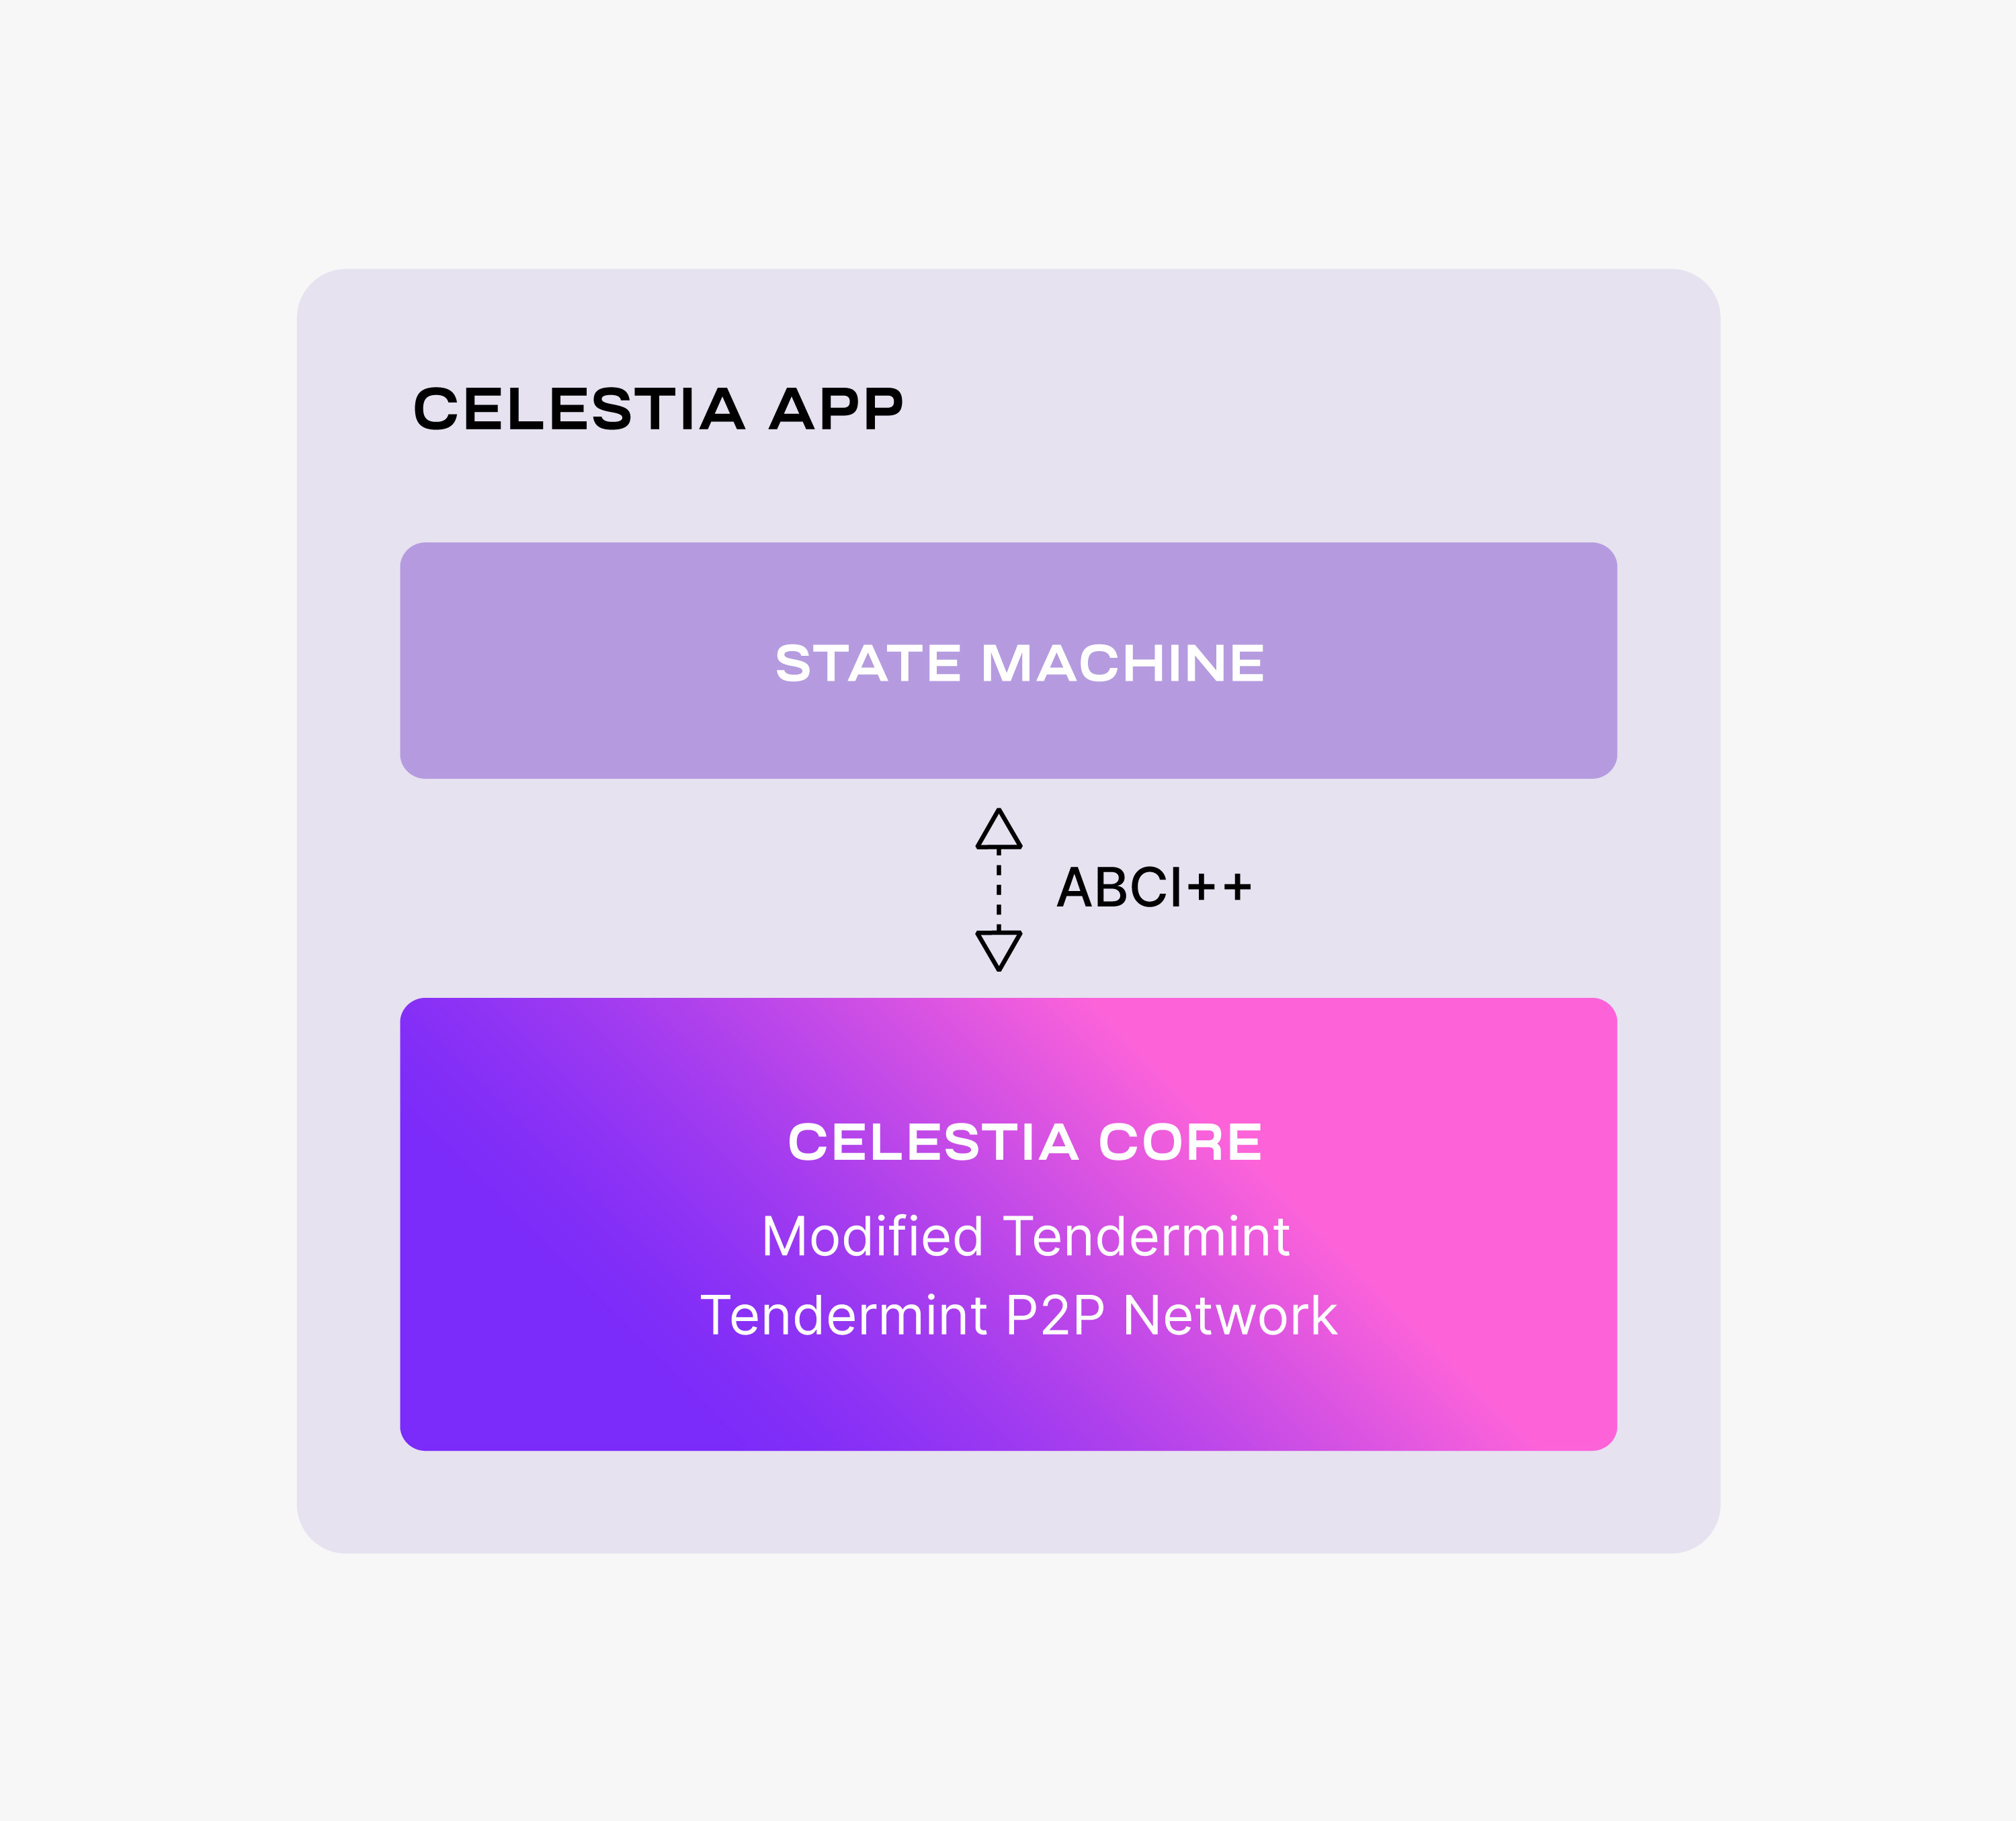 Main components of celestia-app